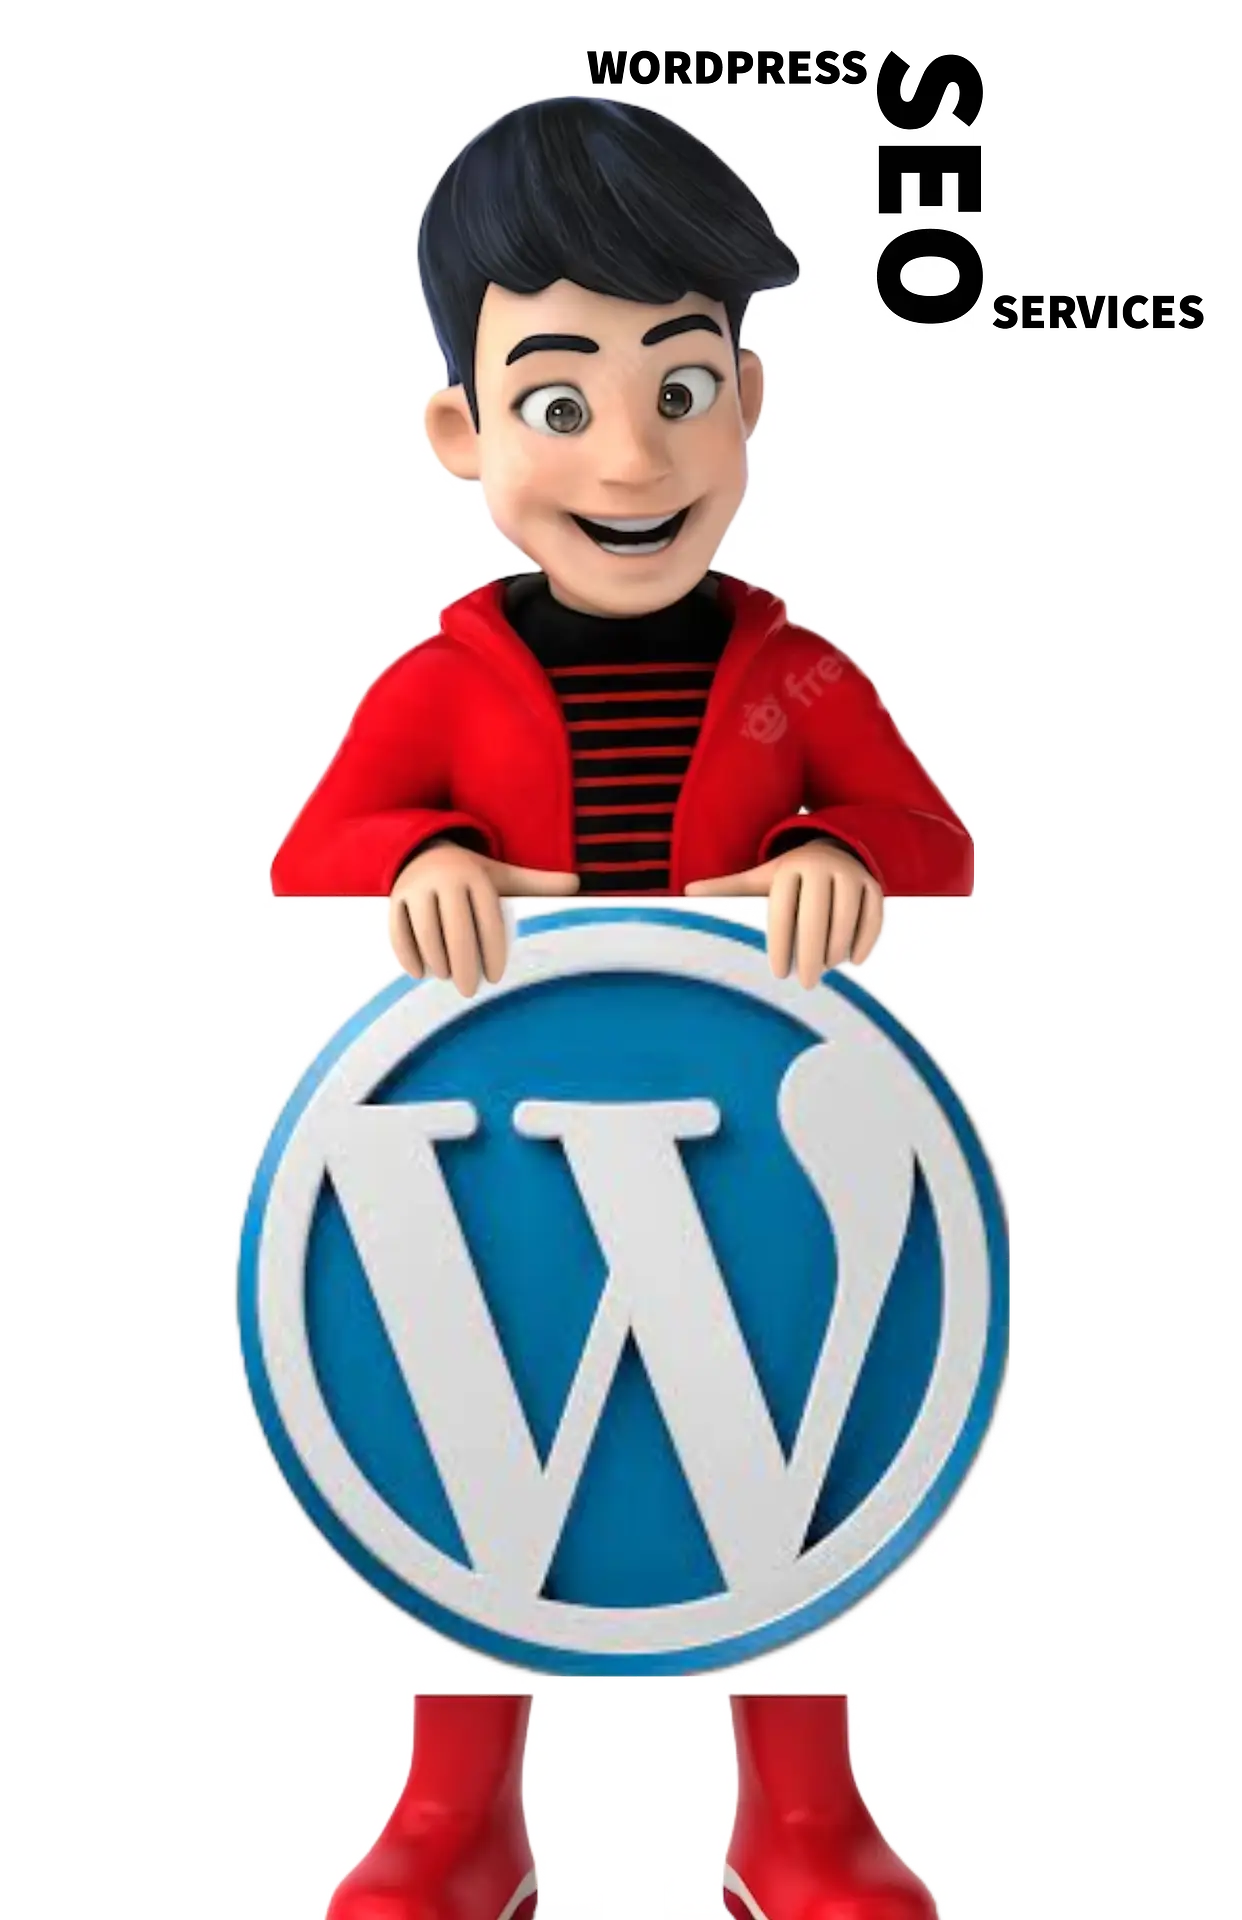 Wordpress Development Company Ahmedabad, India | WordPress Development Service India, WordPress Theme development, WordPress plugins development, WordPress Development agencies India, Hire WordPress Developer India